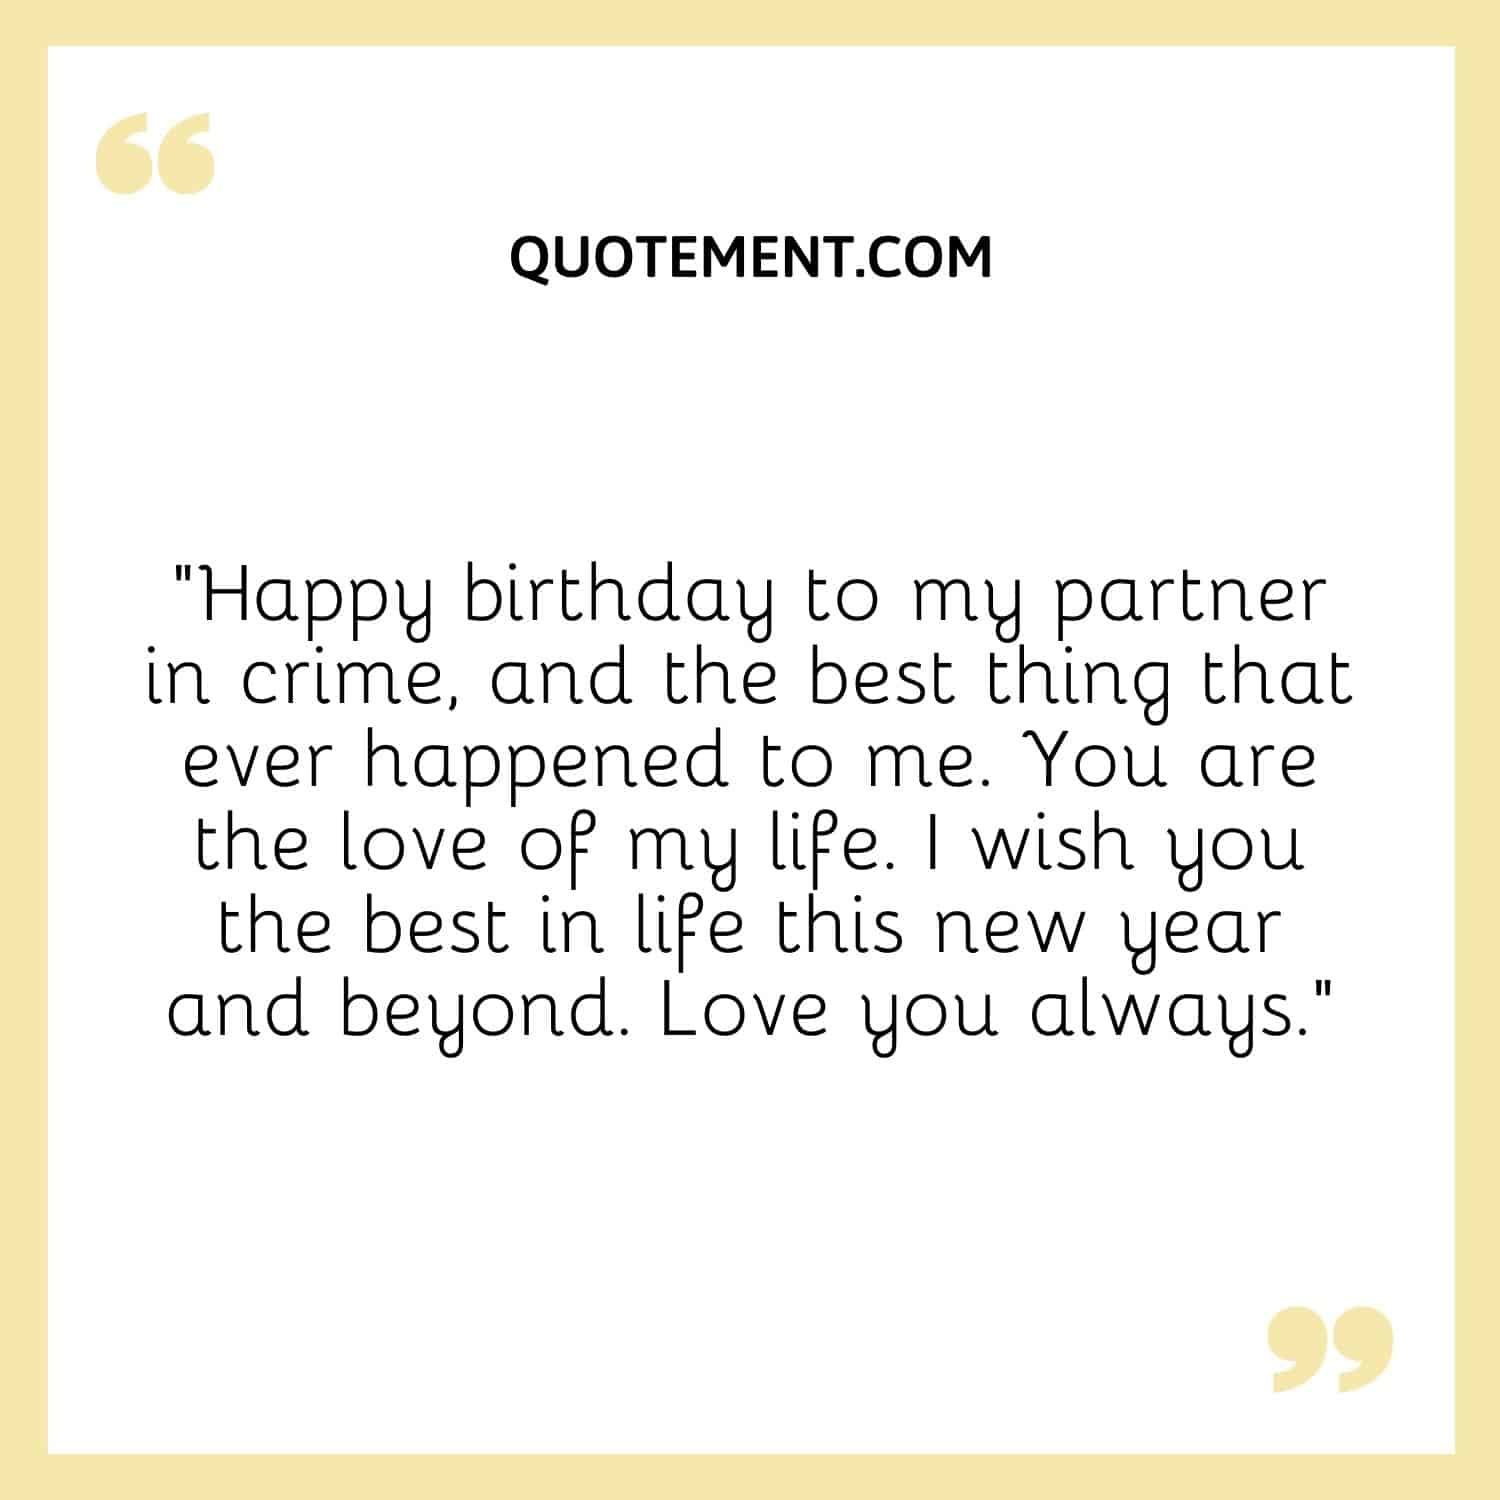 Happy birthday to my partner in crime,